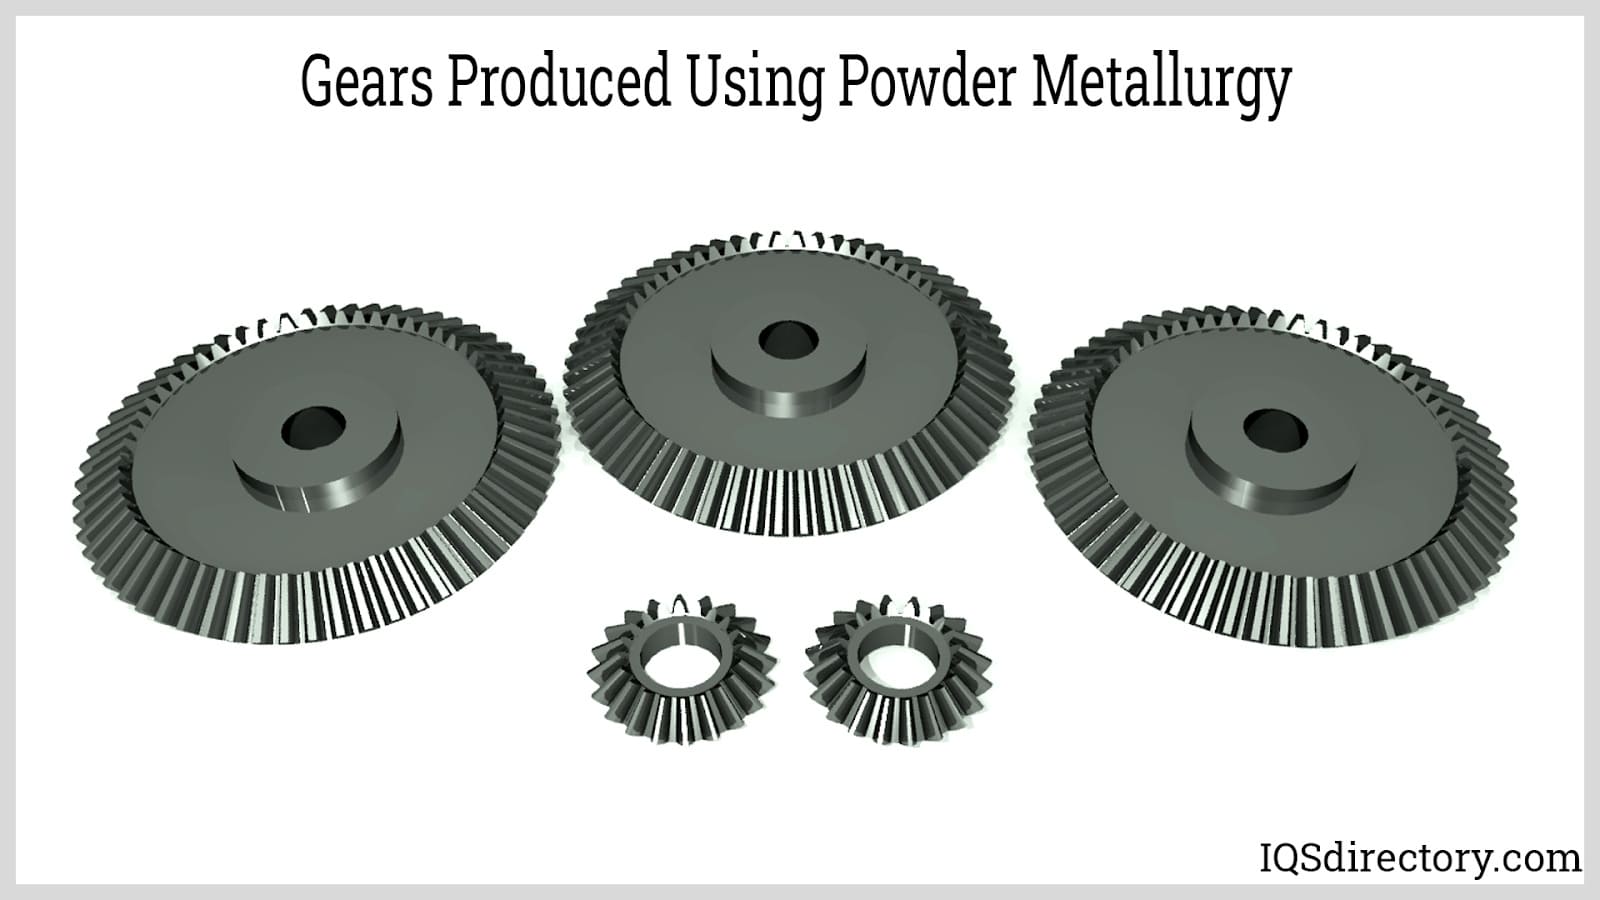 Gears Produced Using Powder Metallurgy